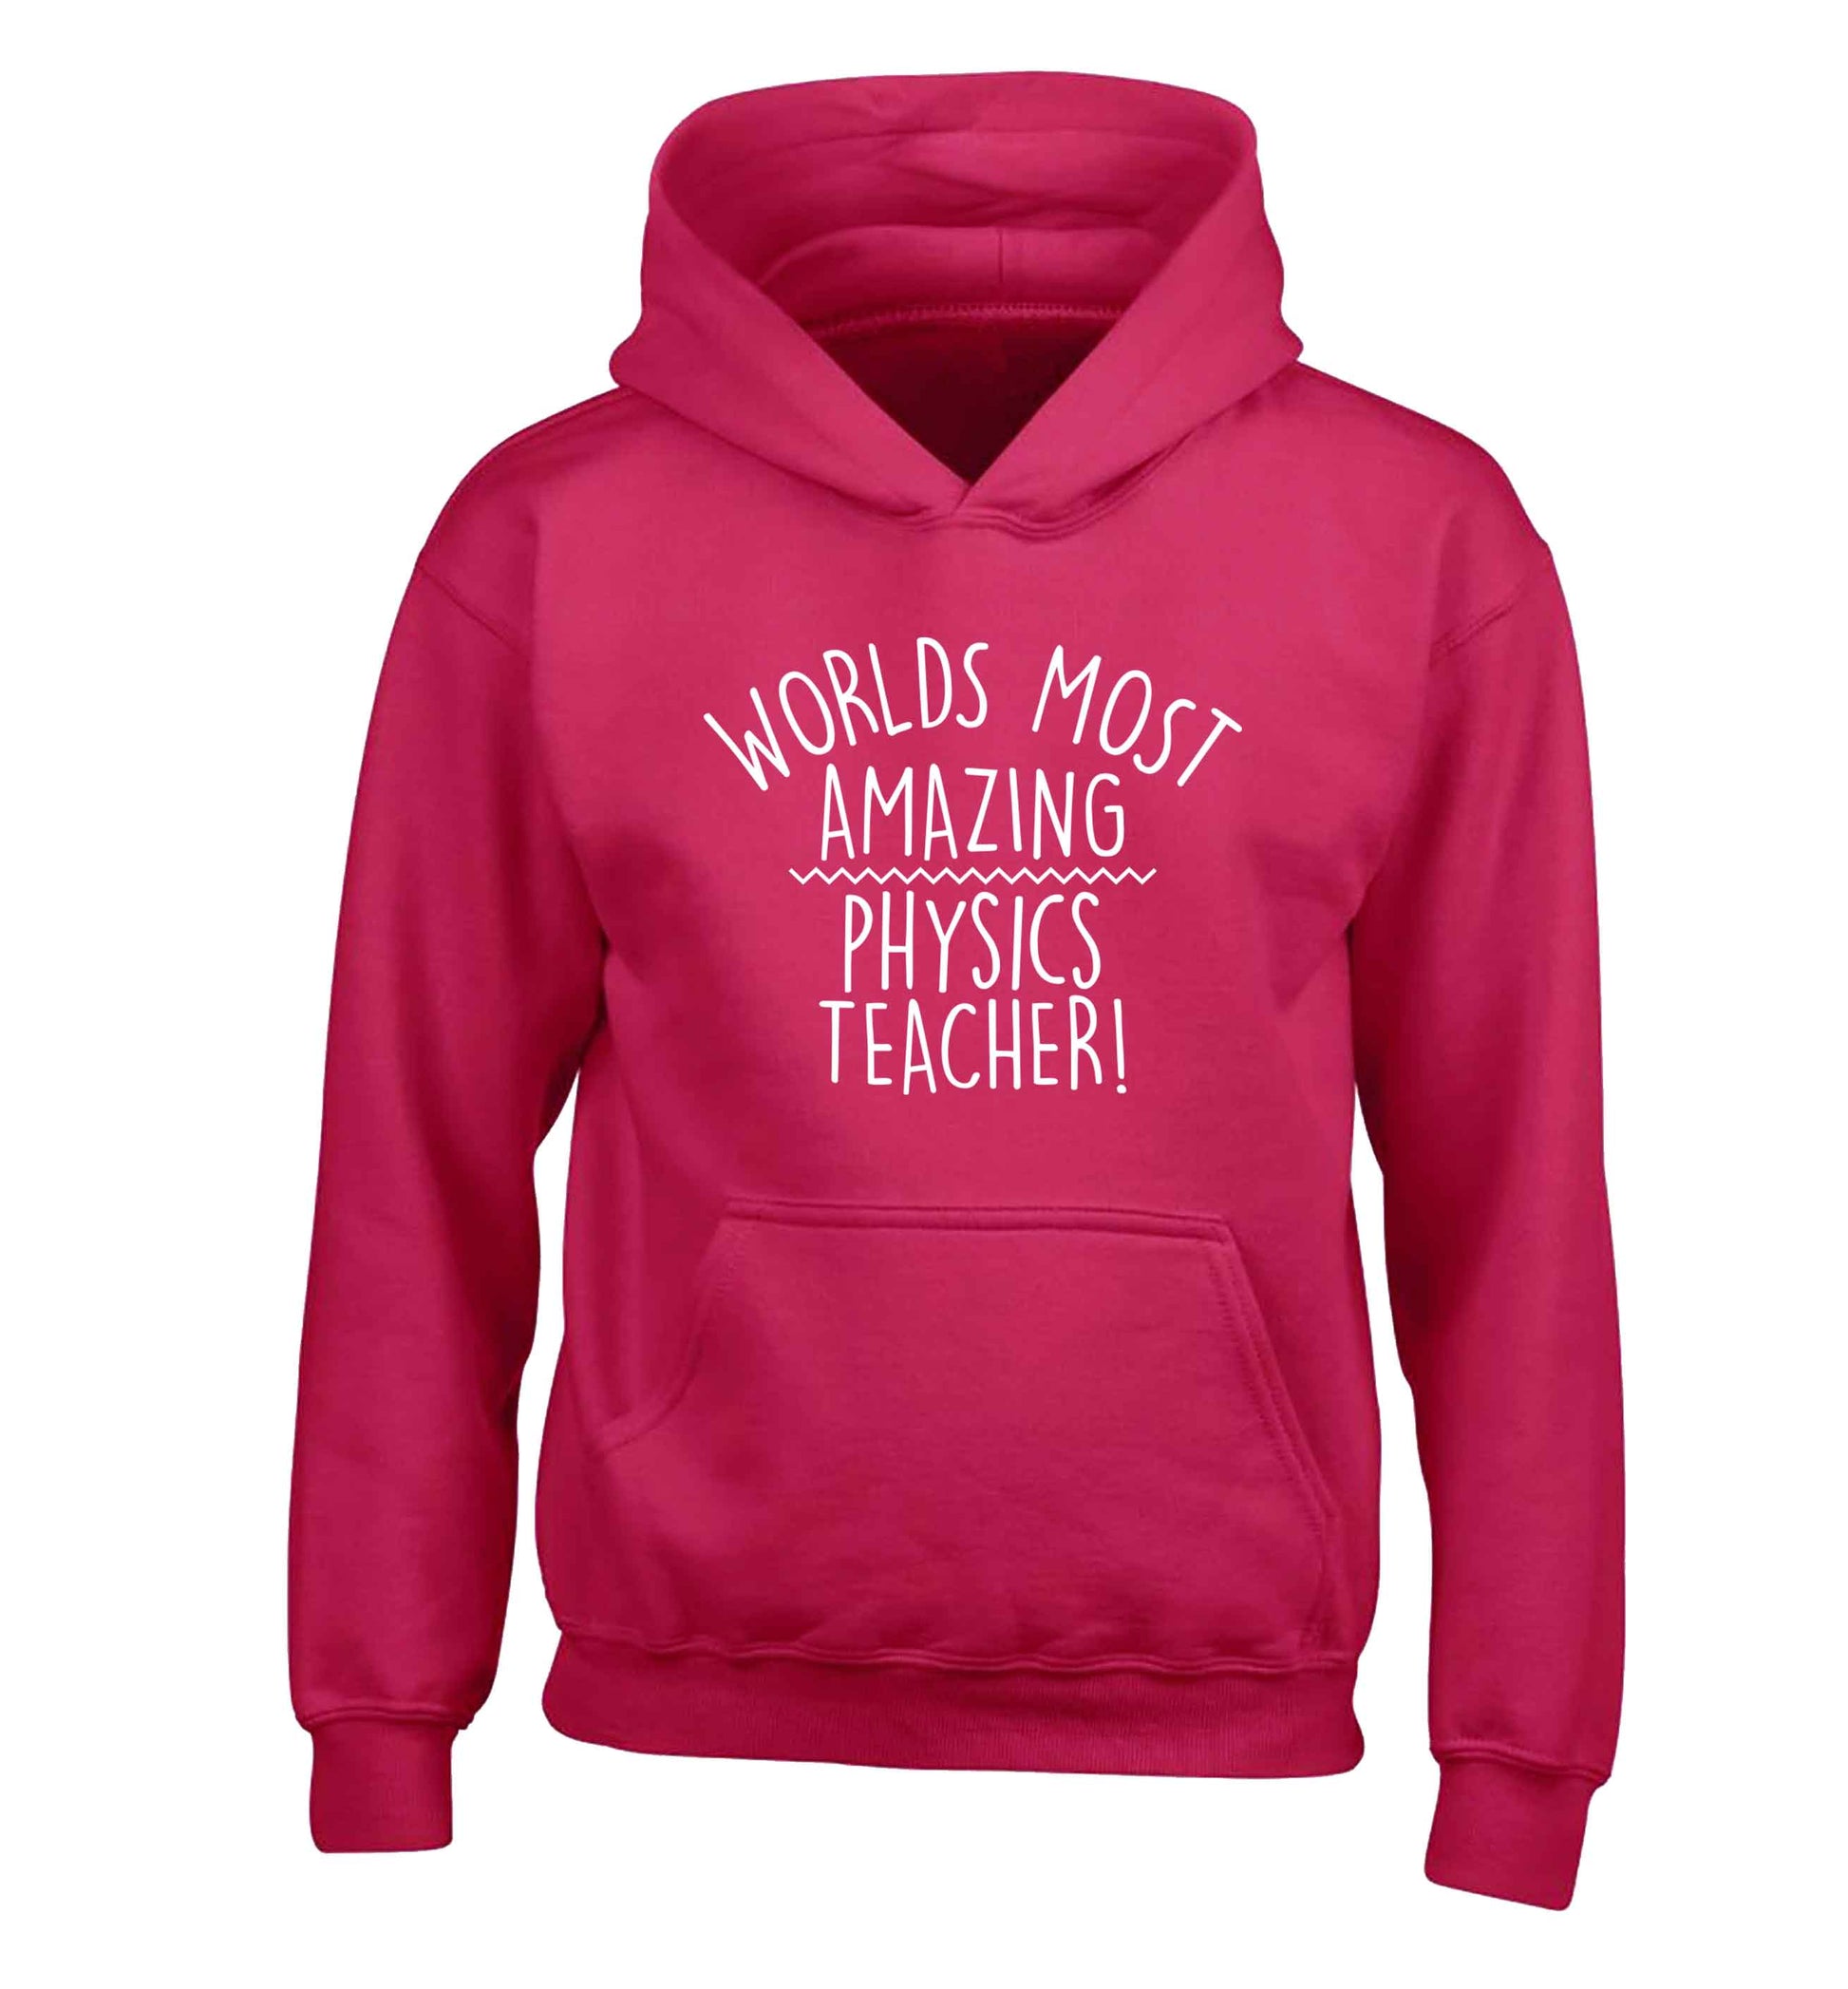 Worlds most amazing physics teacher children's pink hoodie 12-13 Years